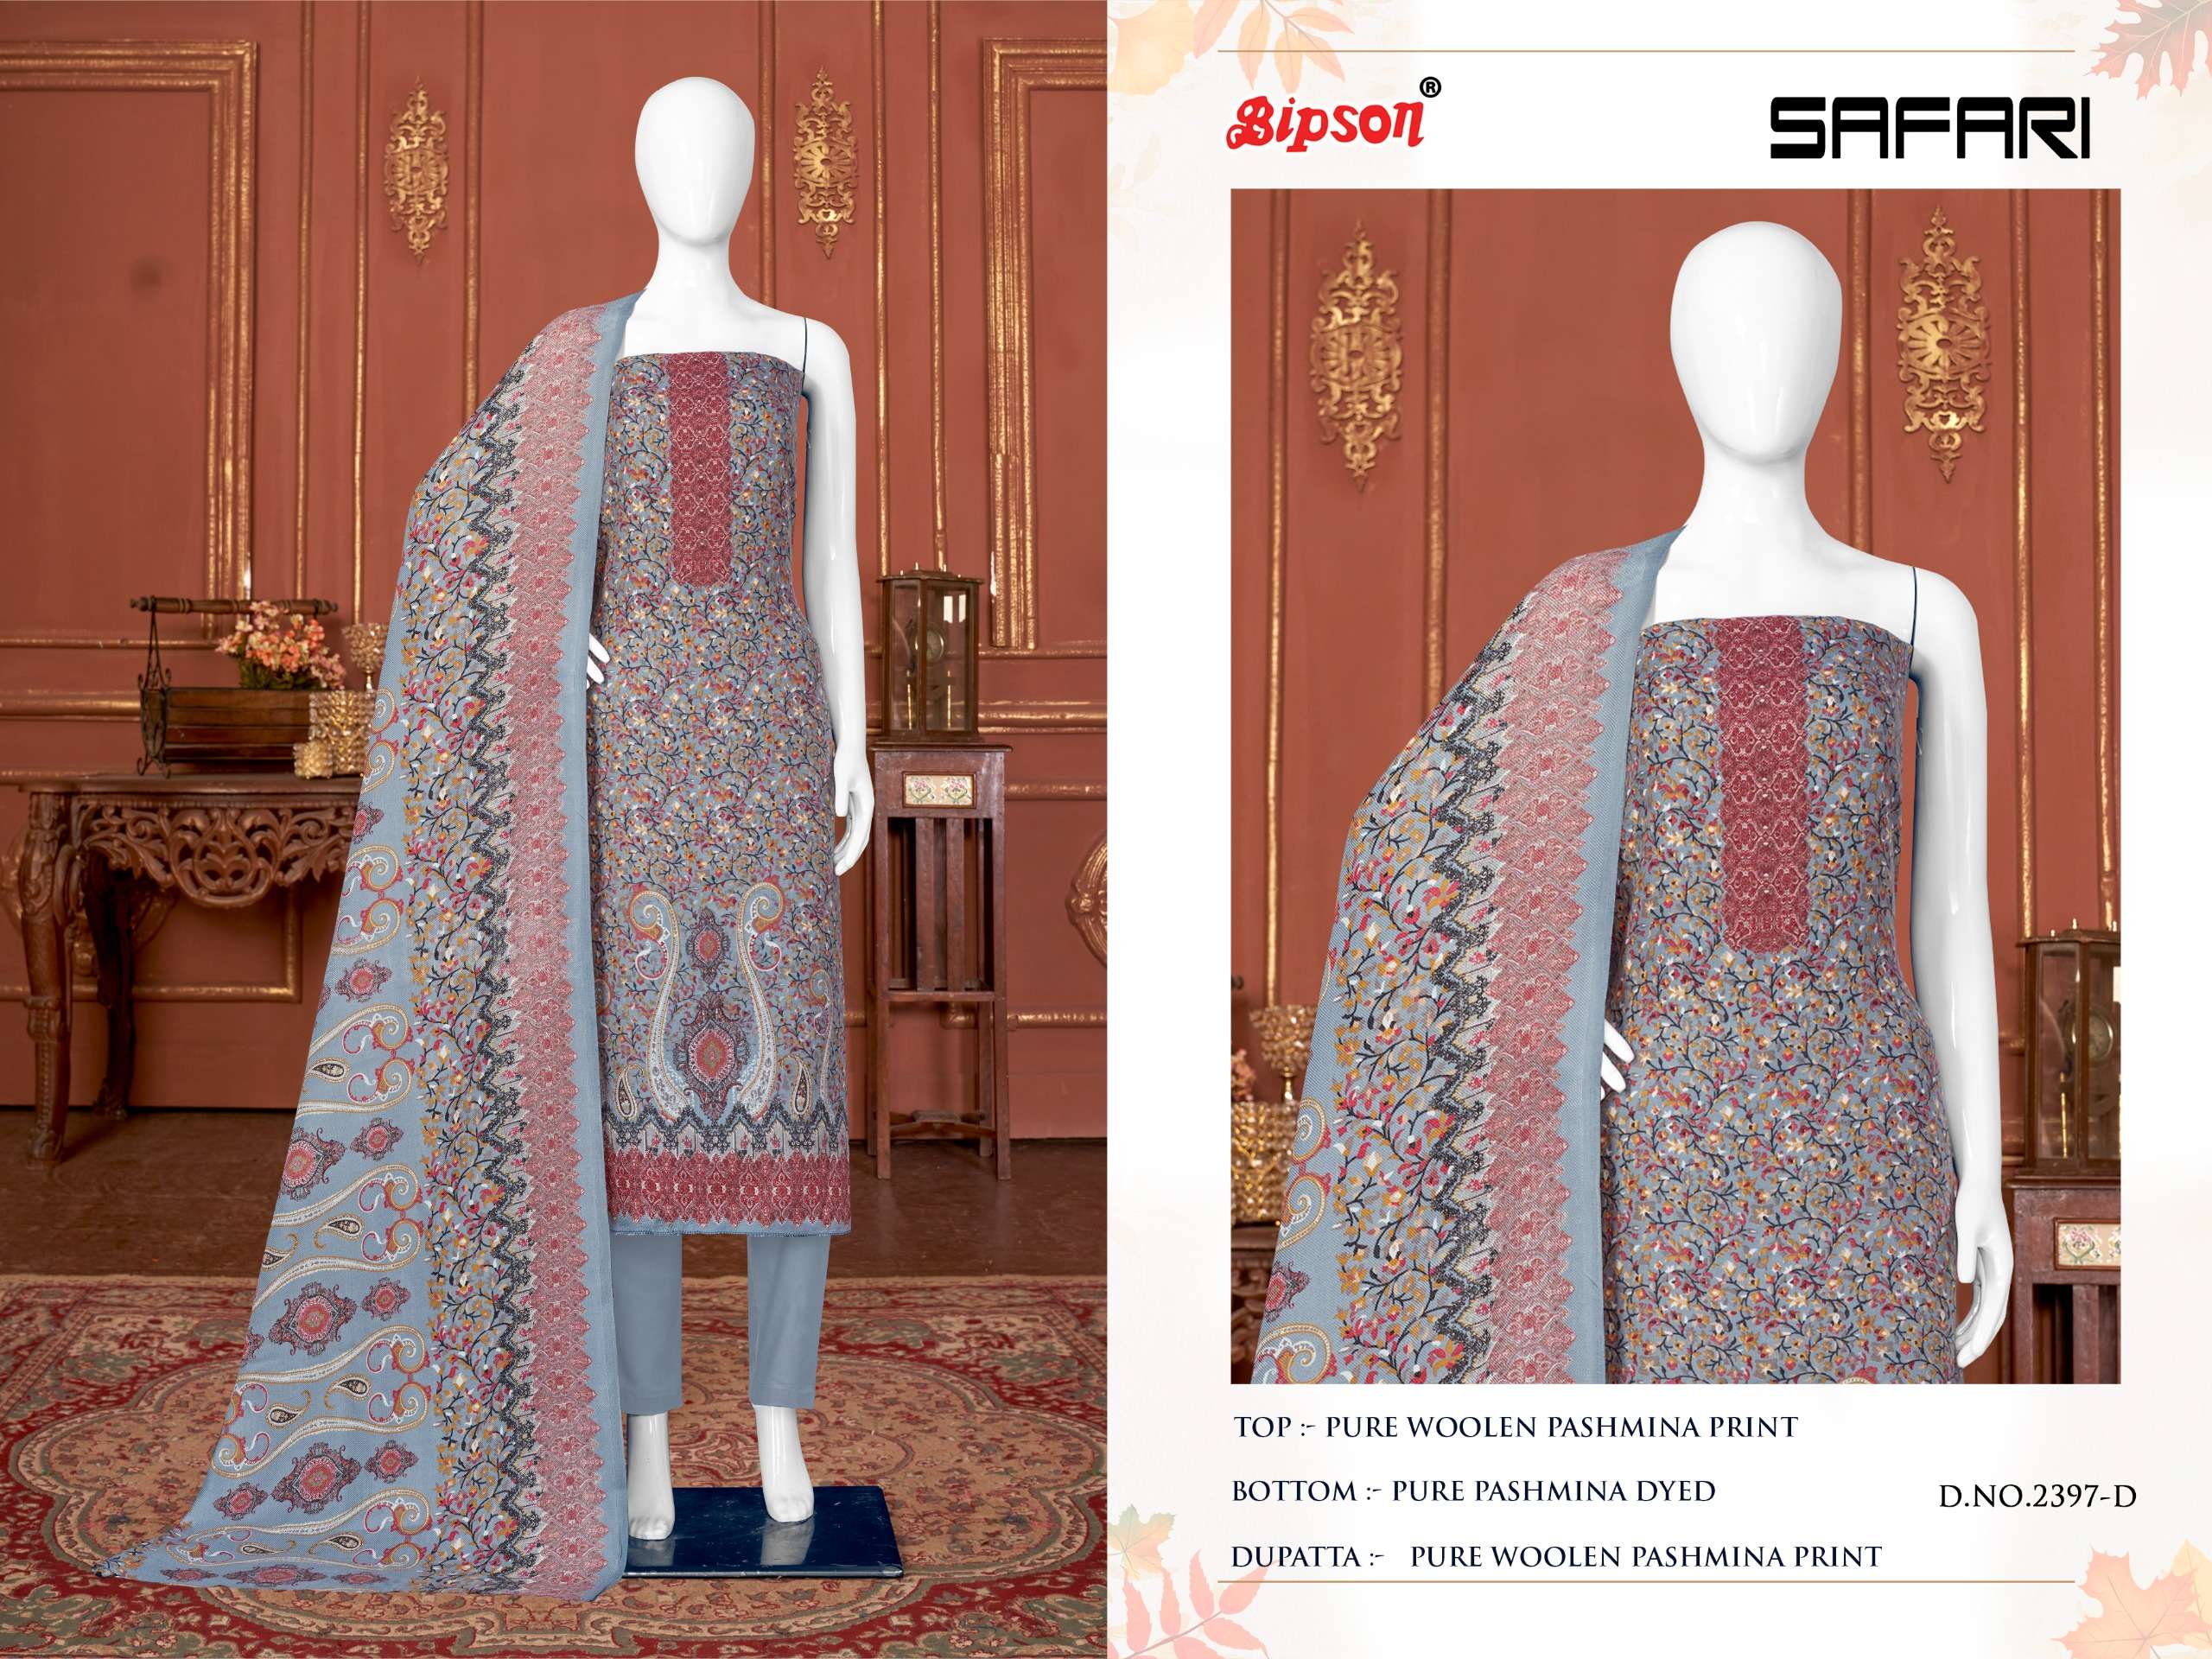 bipson safari 2397 colour series latest pakistani salwar kameez wholesaler surat gujarat